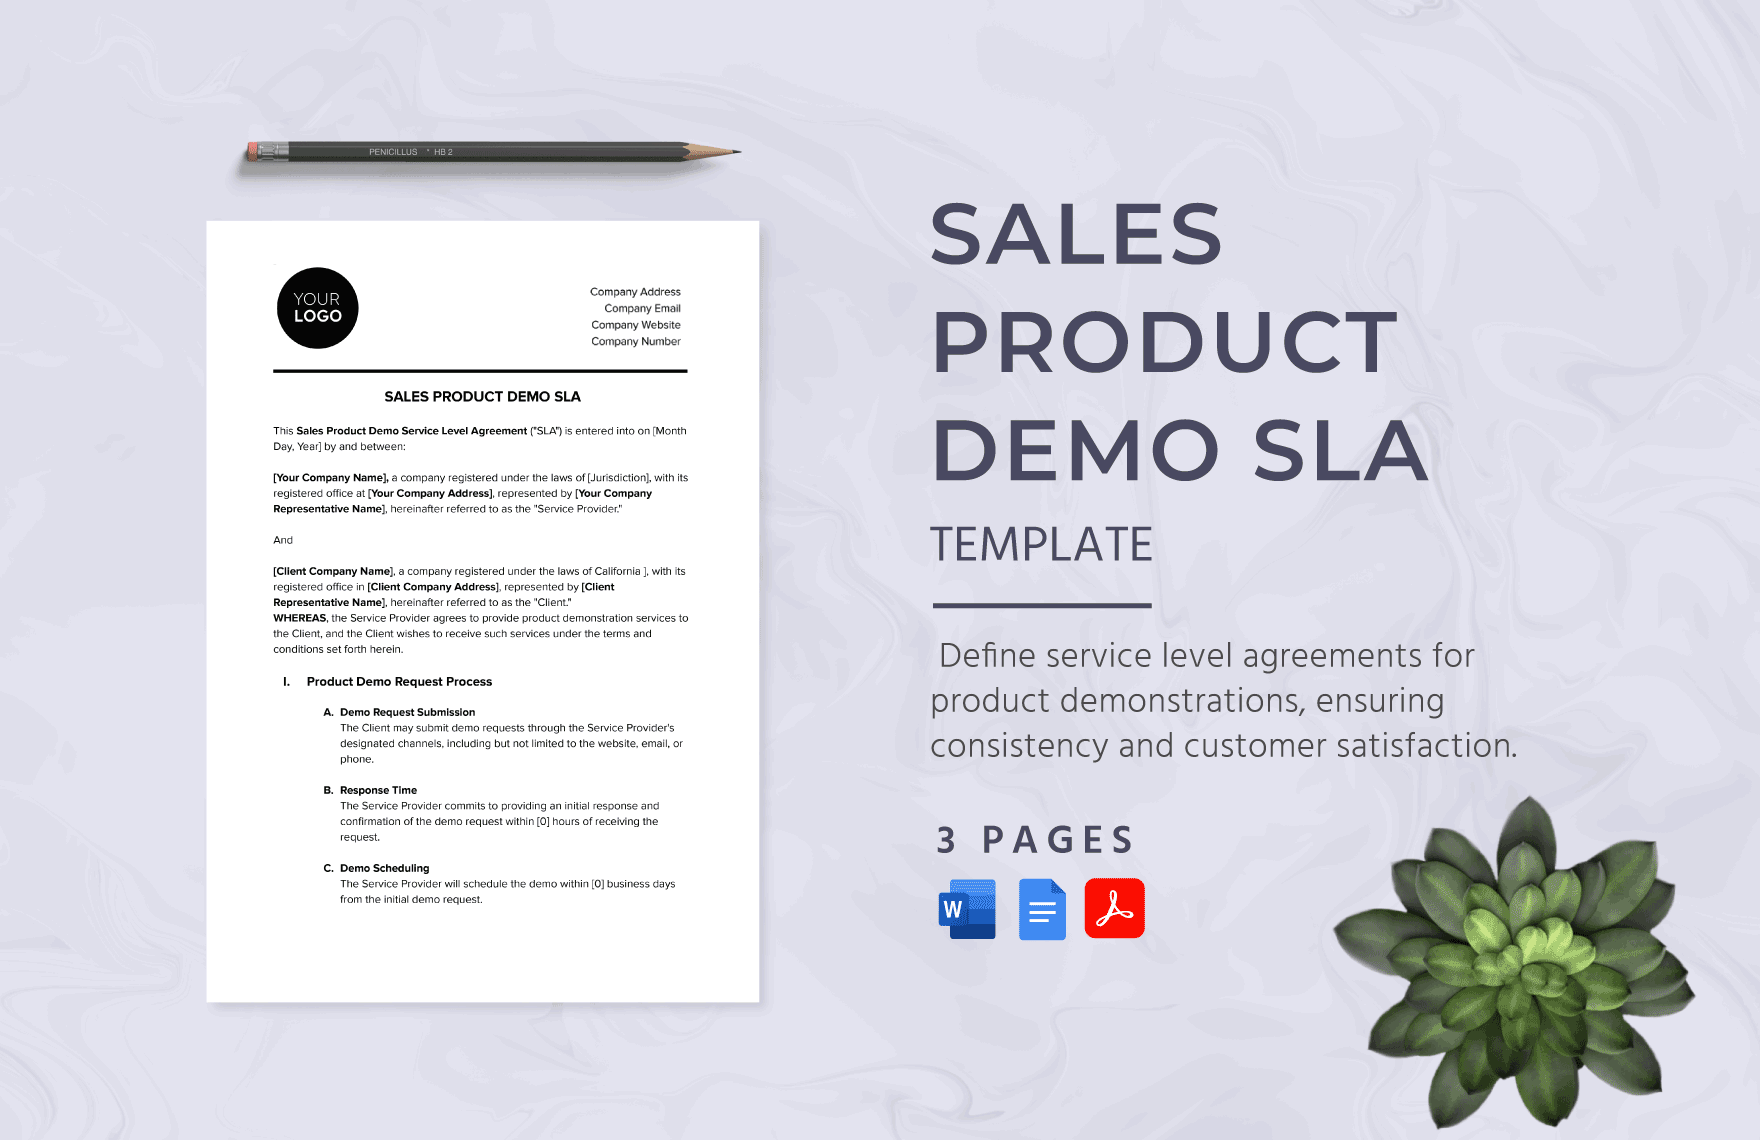 Sales Product Demo SLA Template